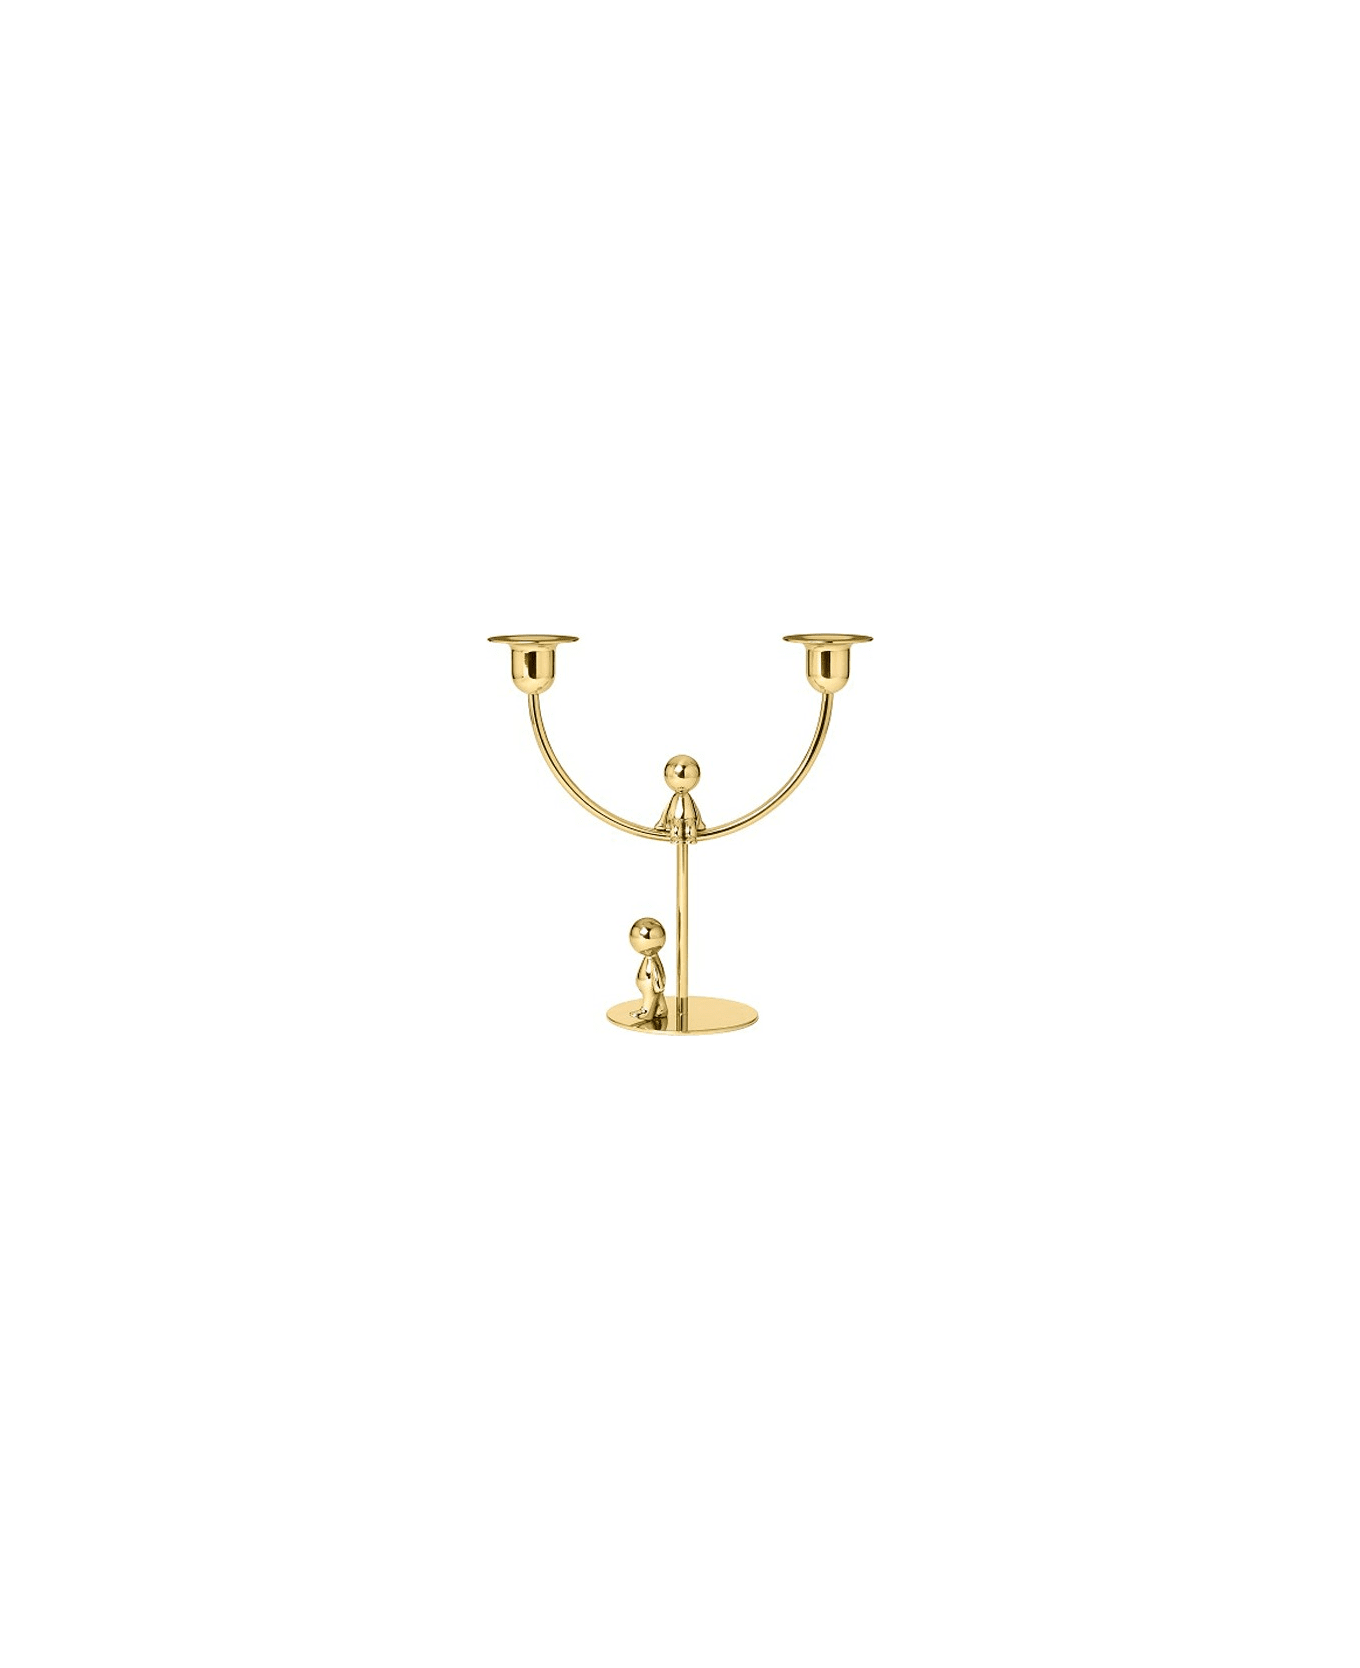 Ghidini 1961 Omini - The Thinker Walkman Candlestick Polished Brass - Polished brass